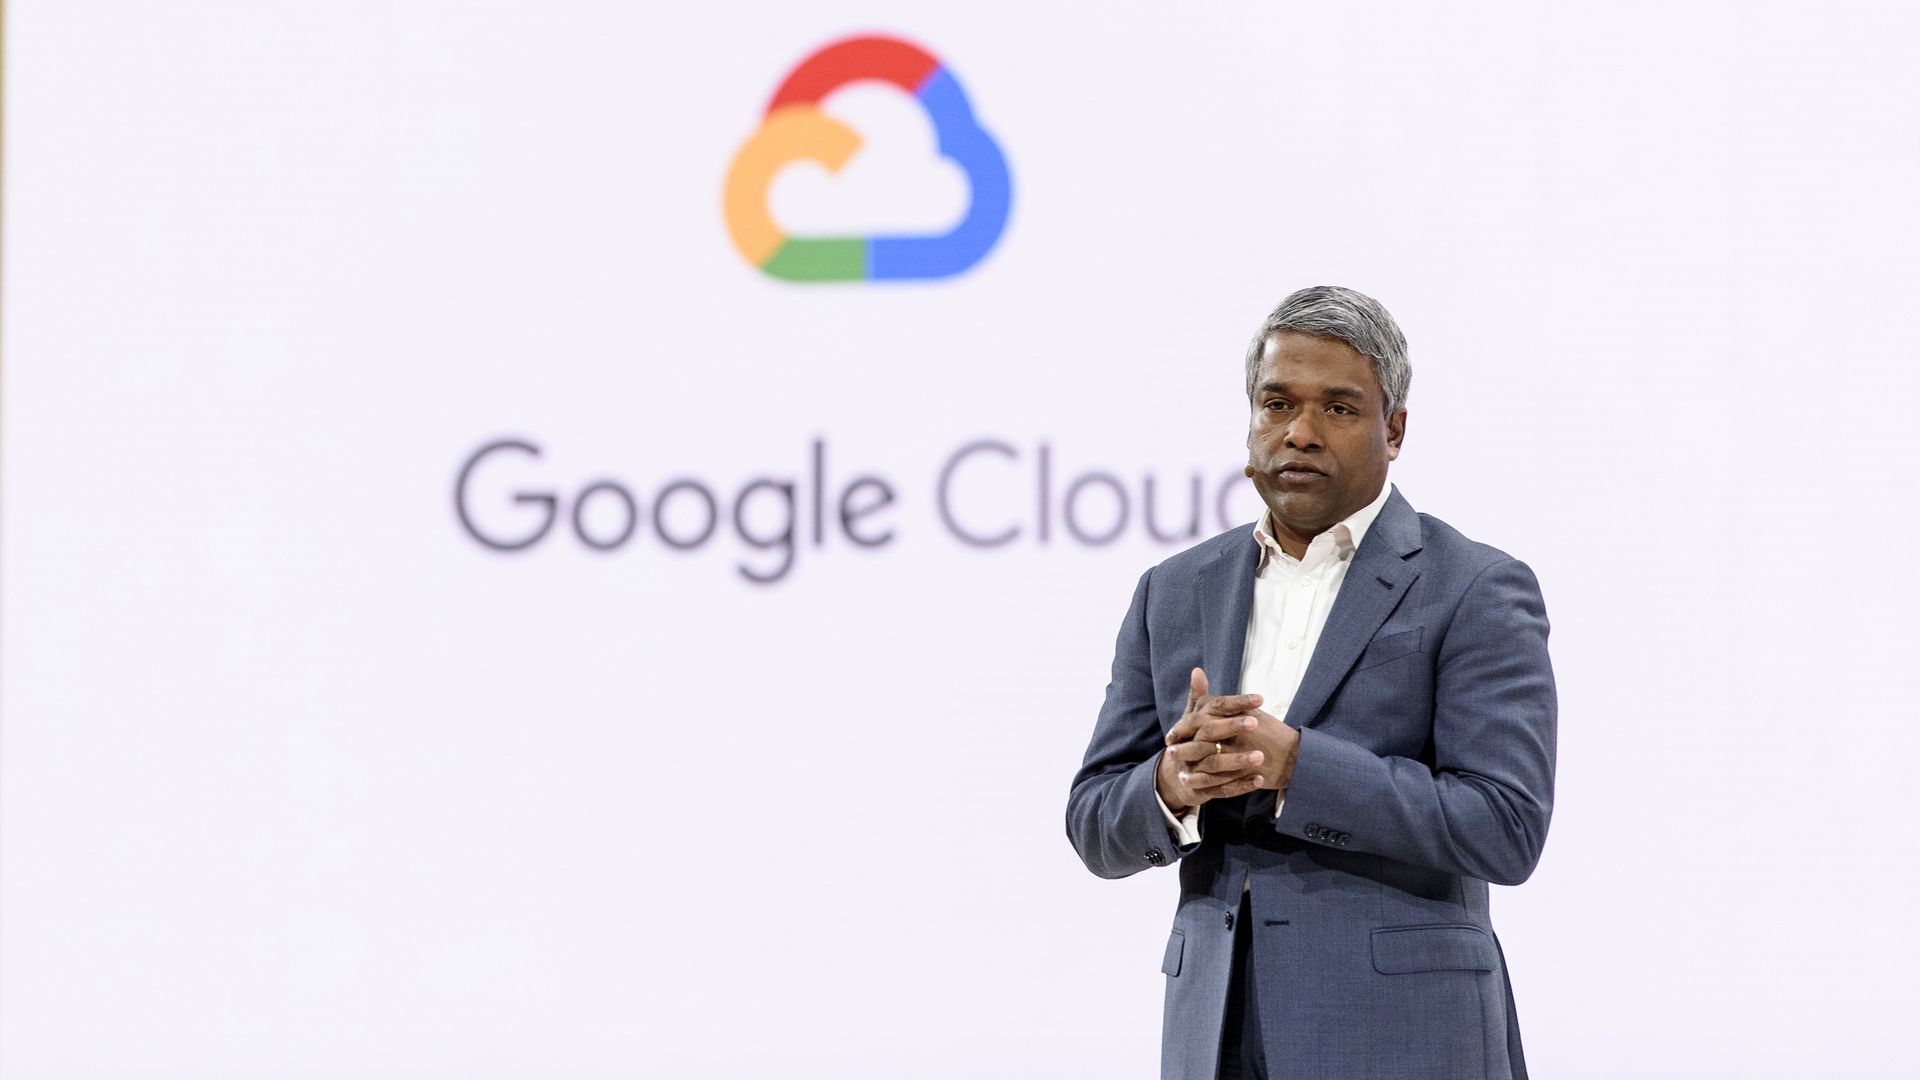 Google CEO Thomas Kurian, speaking at the Google Cloud Next '19 event in San Francisco, California